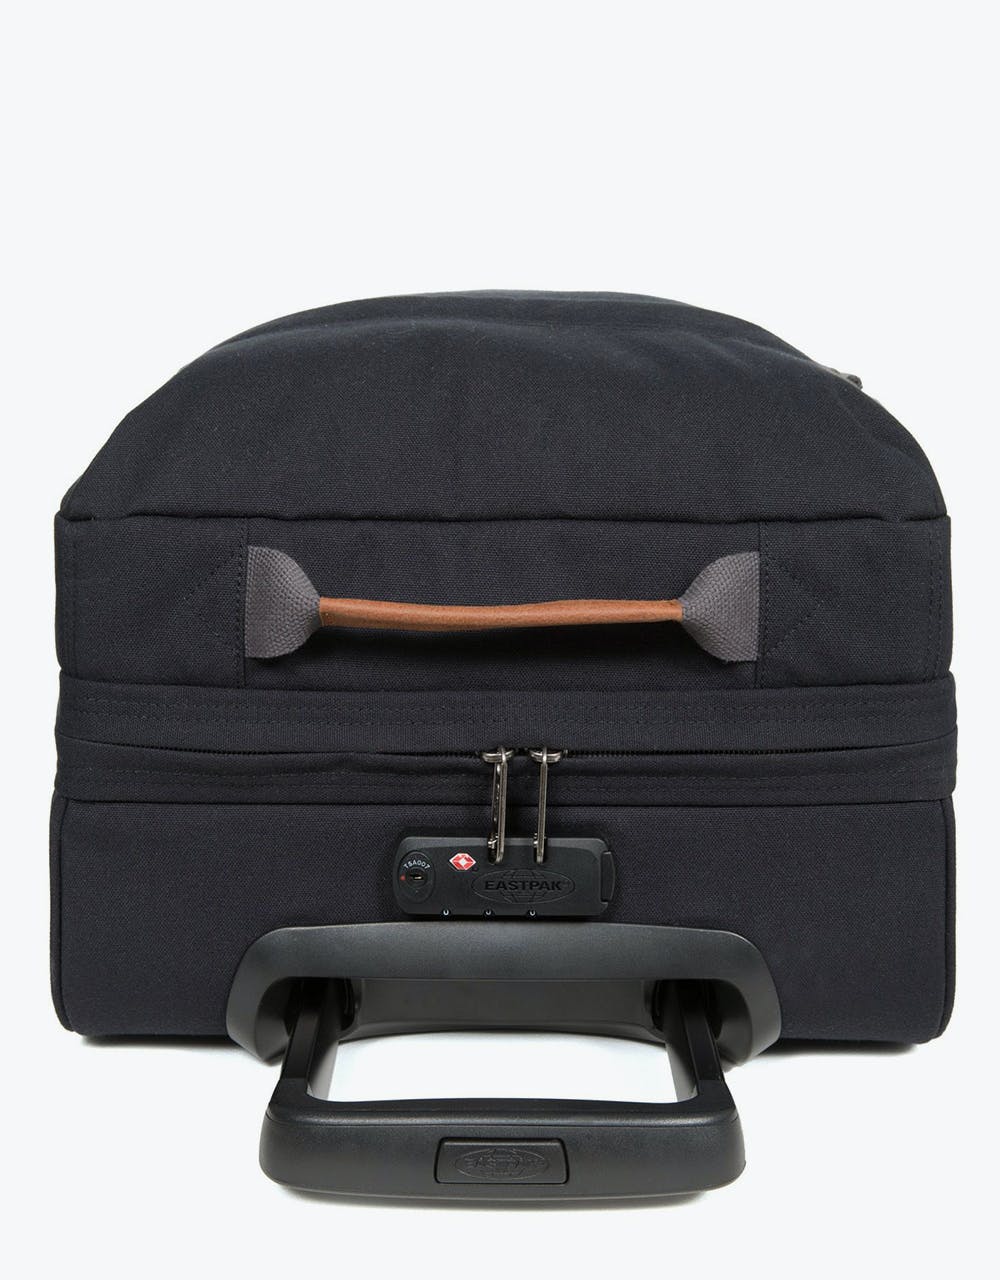 Eastpak Tranzverz Small Wheeled Luggage Bag - Opgrade Black